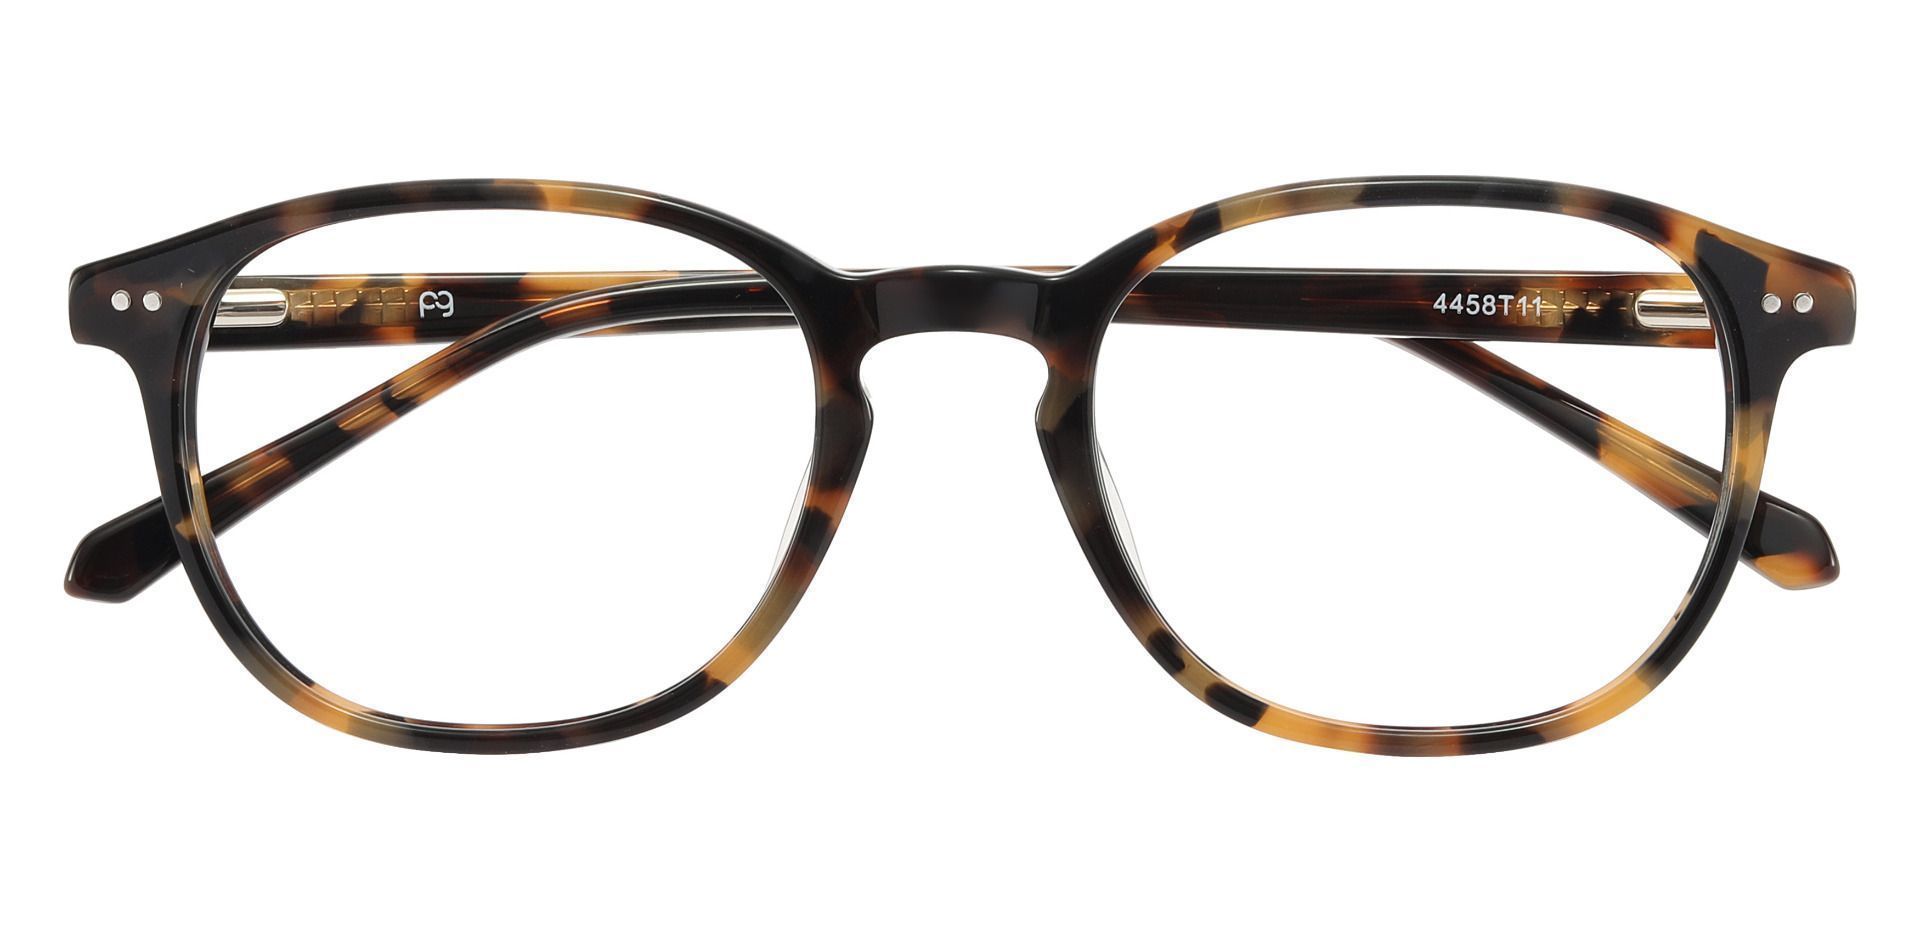 Arabella Oval Lined Bifocal Glasses - Tortoise